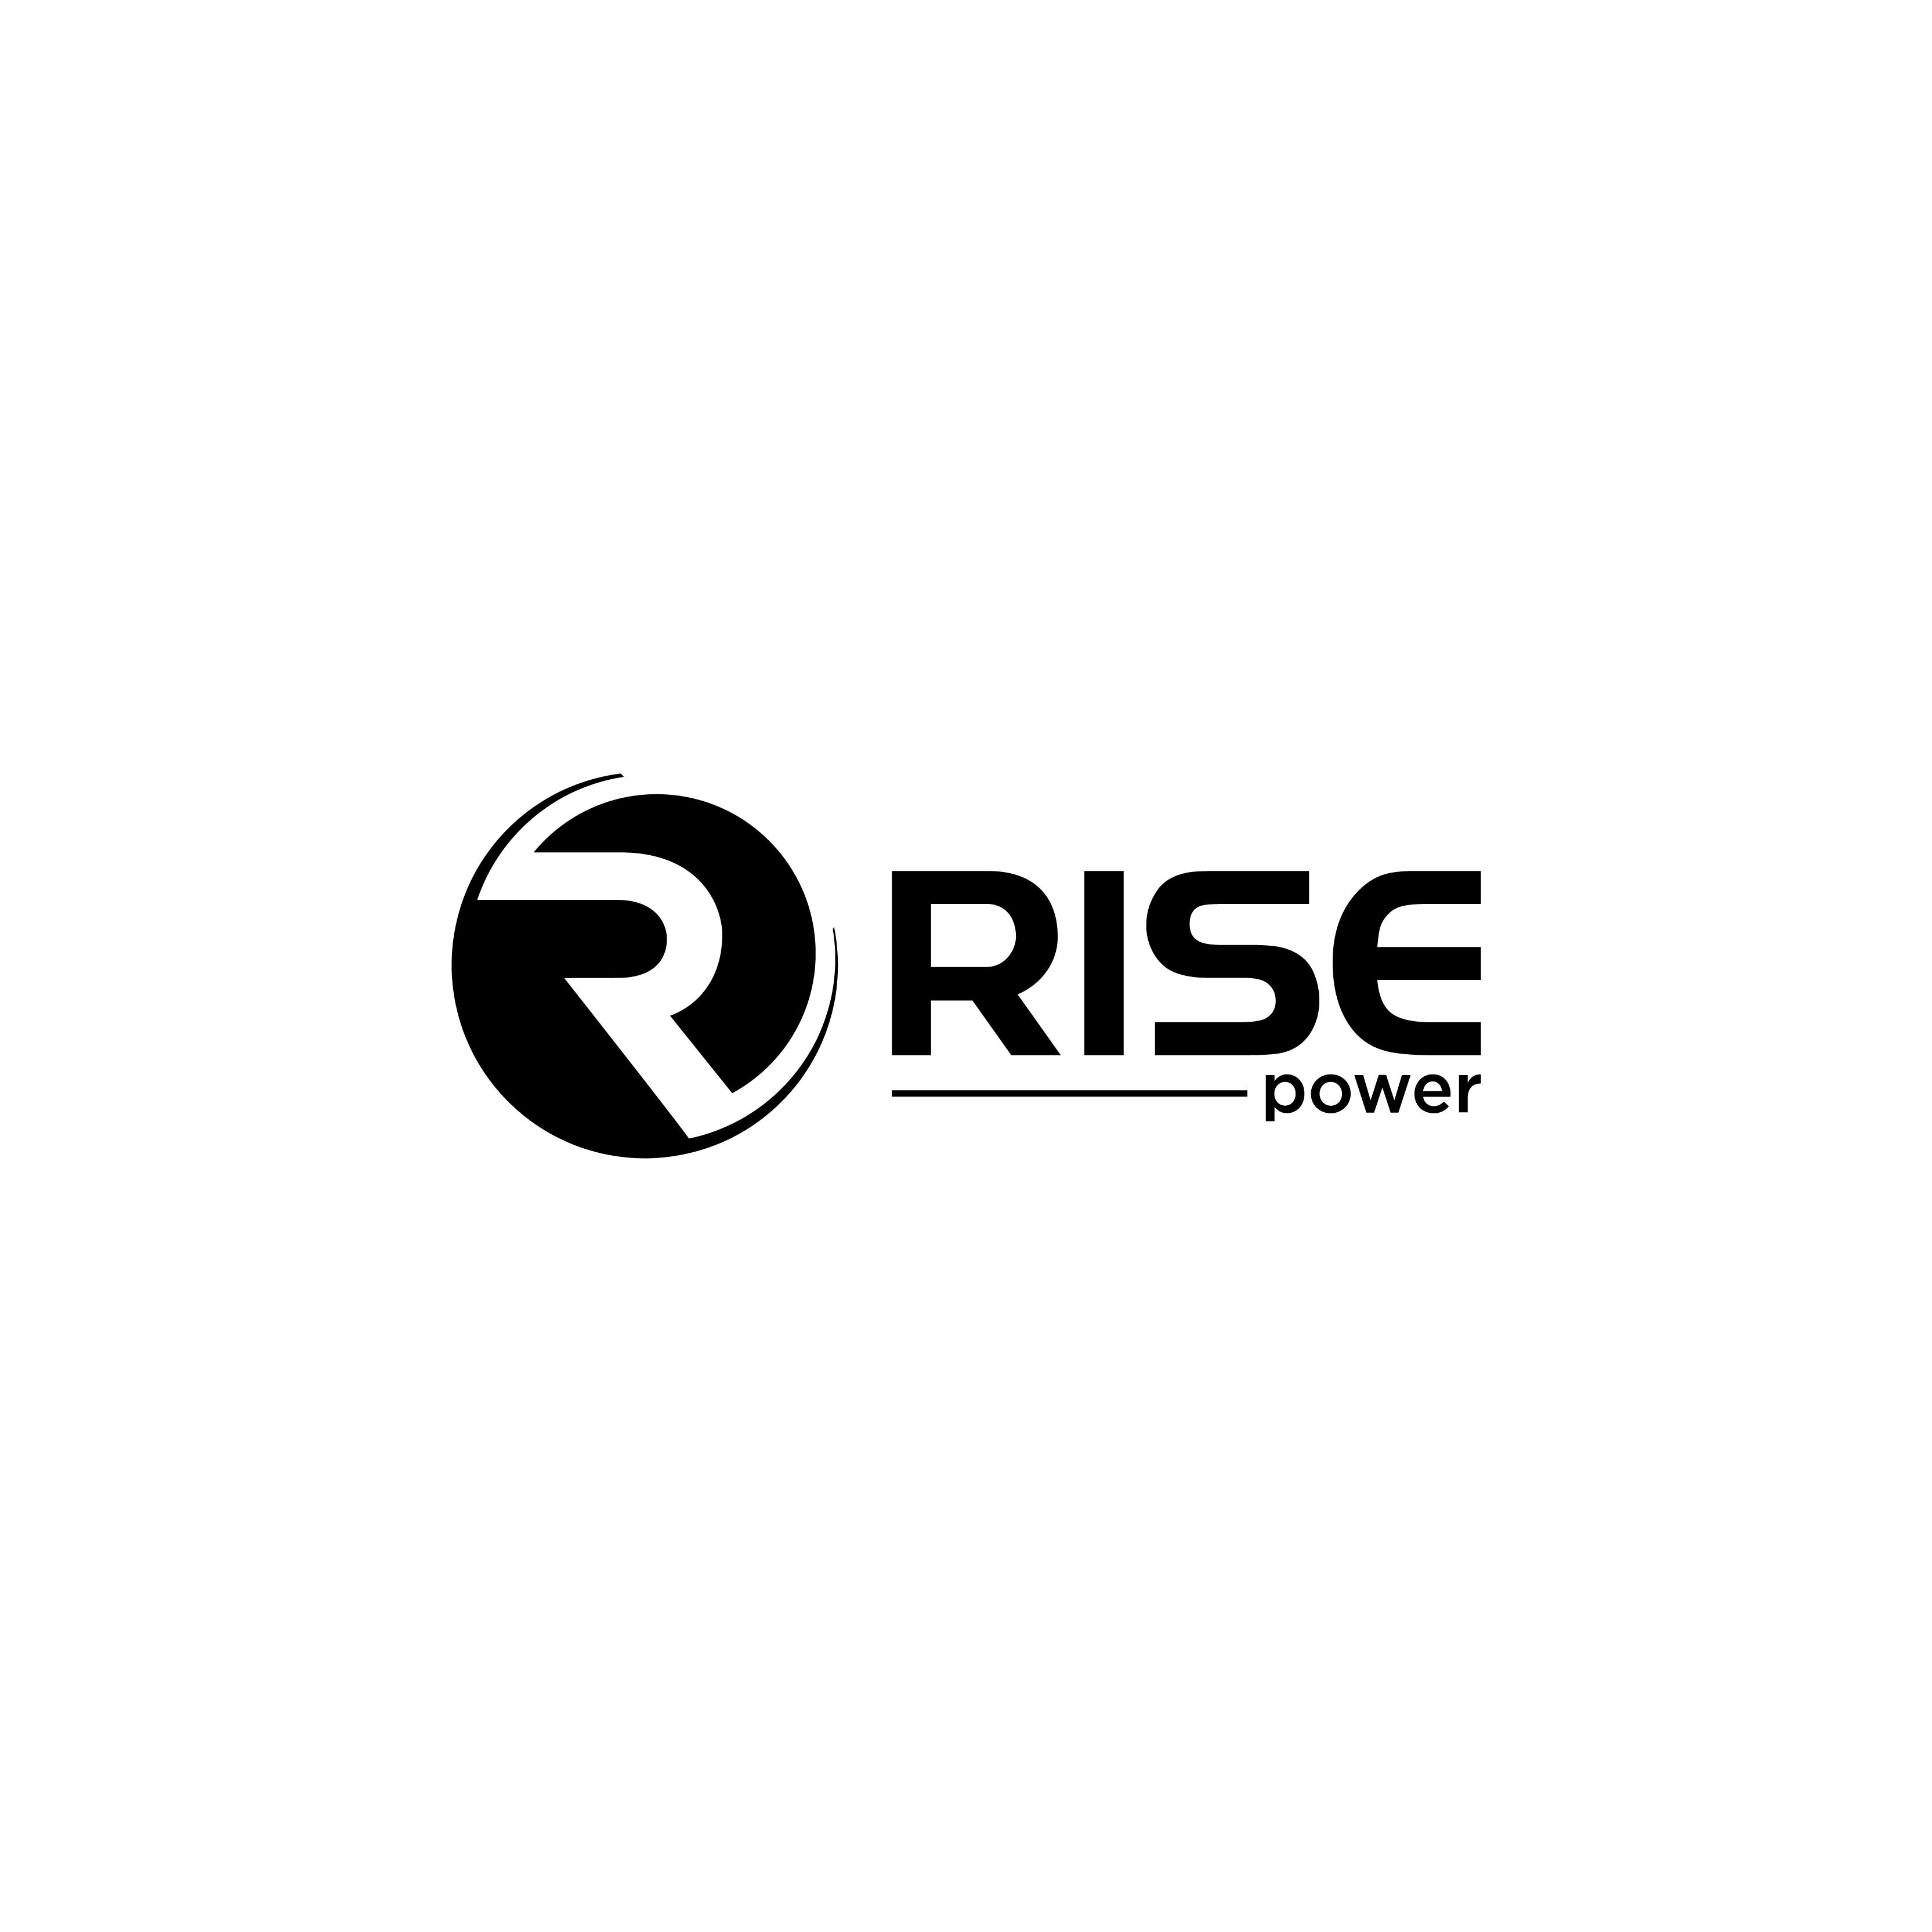 RISE power logo